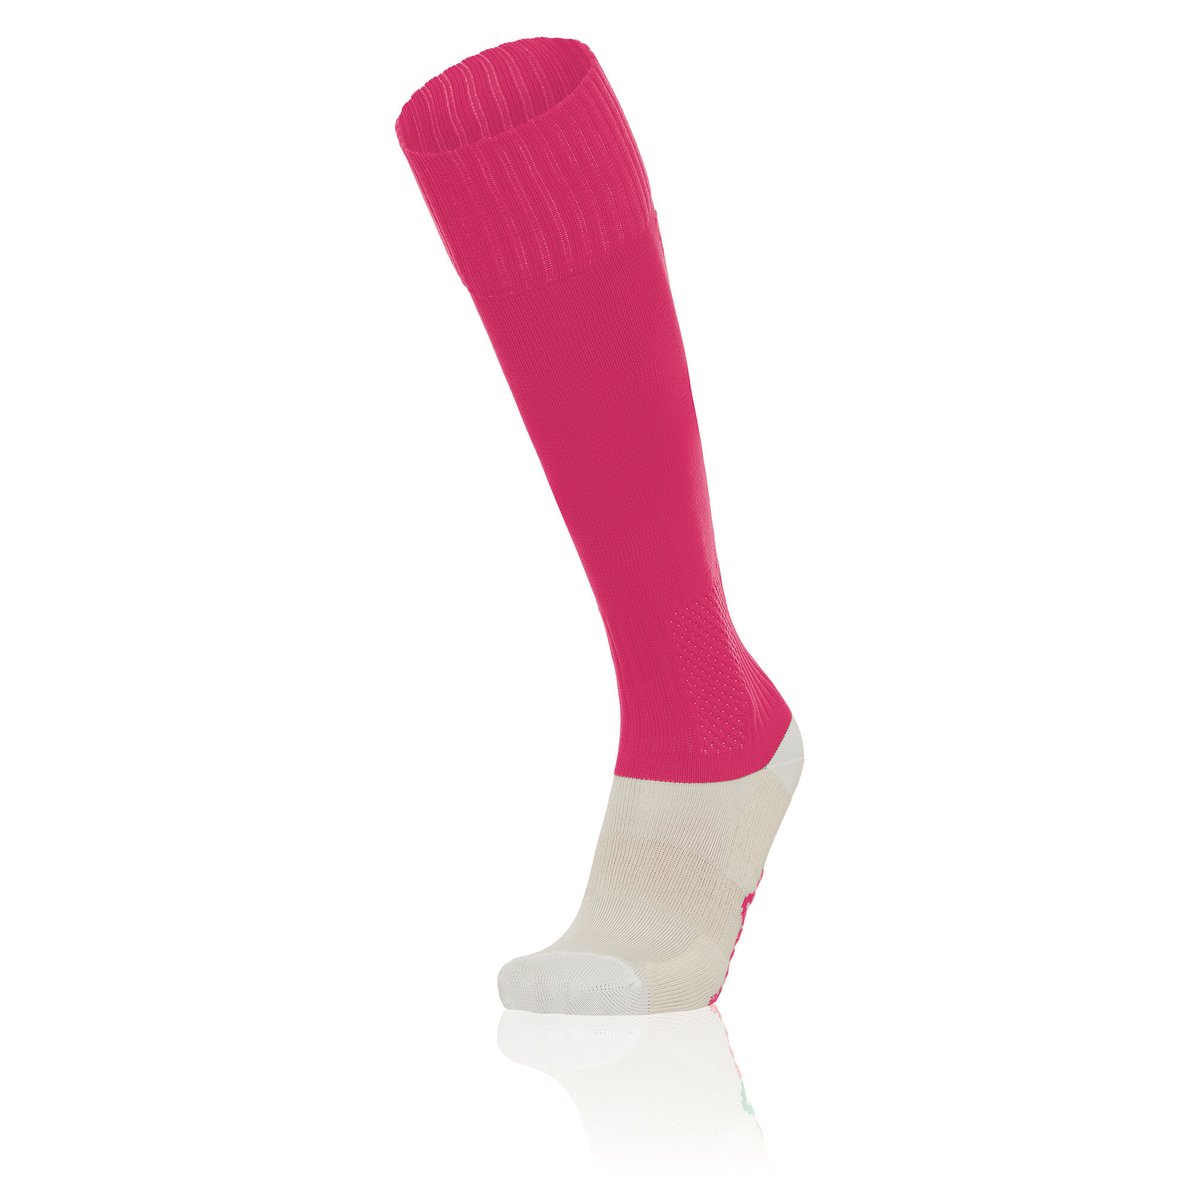 Macron Nitro II Match Sock - Pink (Pack of 5)